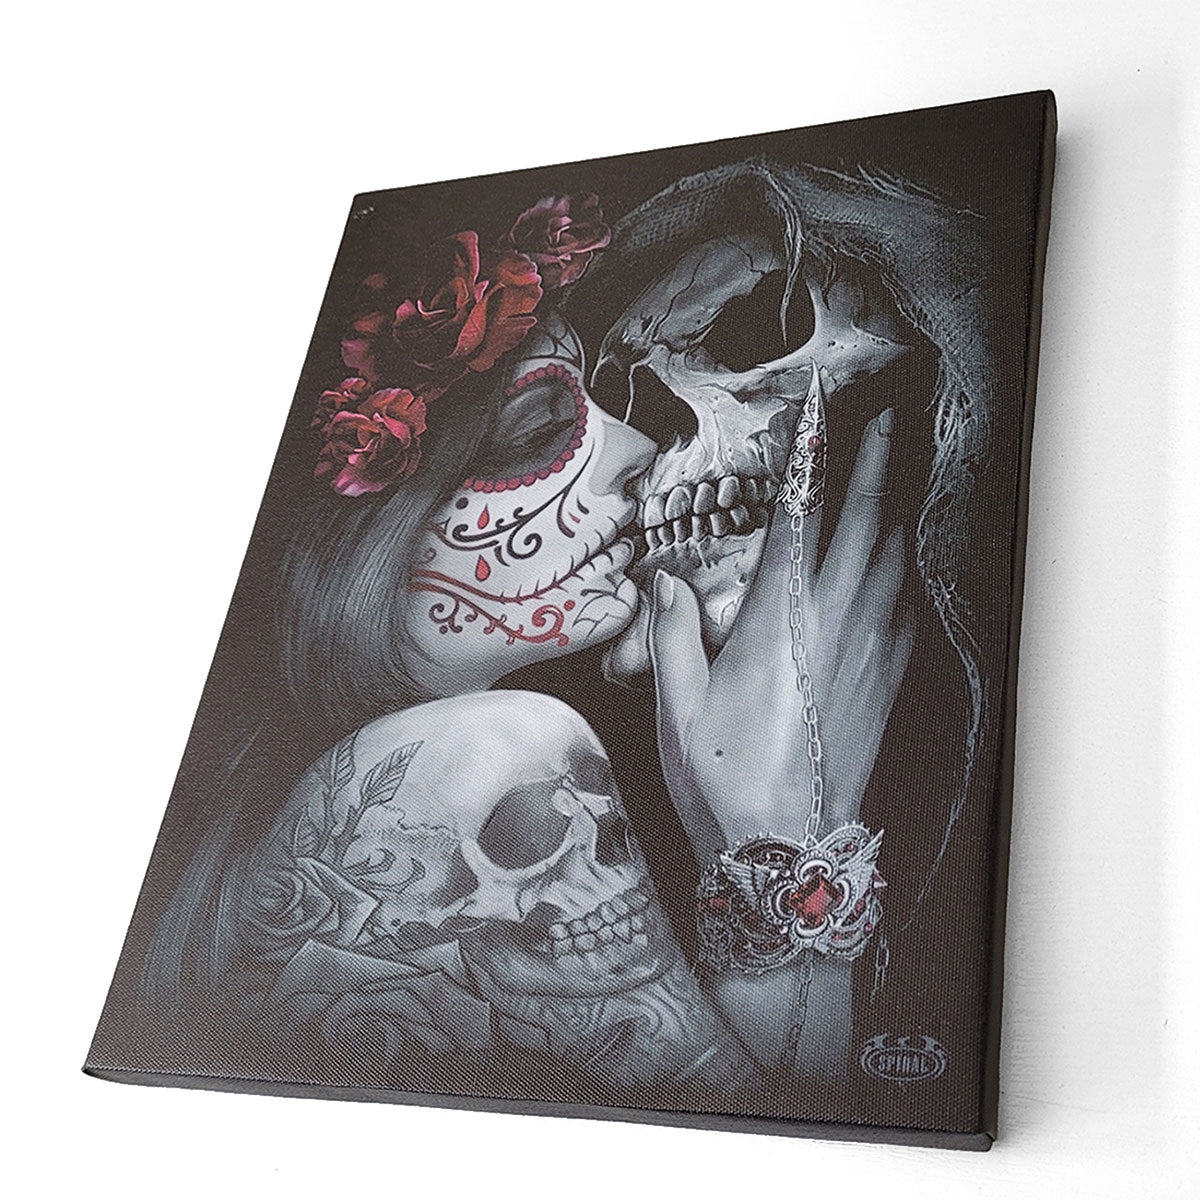 DEAD KISS - Canvas Poster 25x19cm